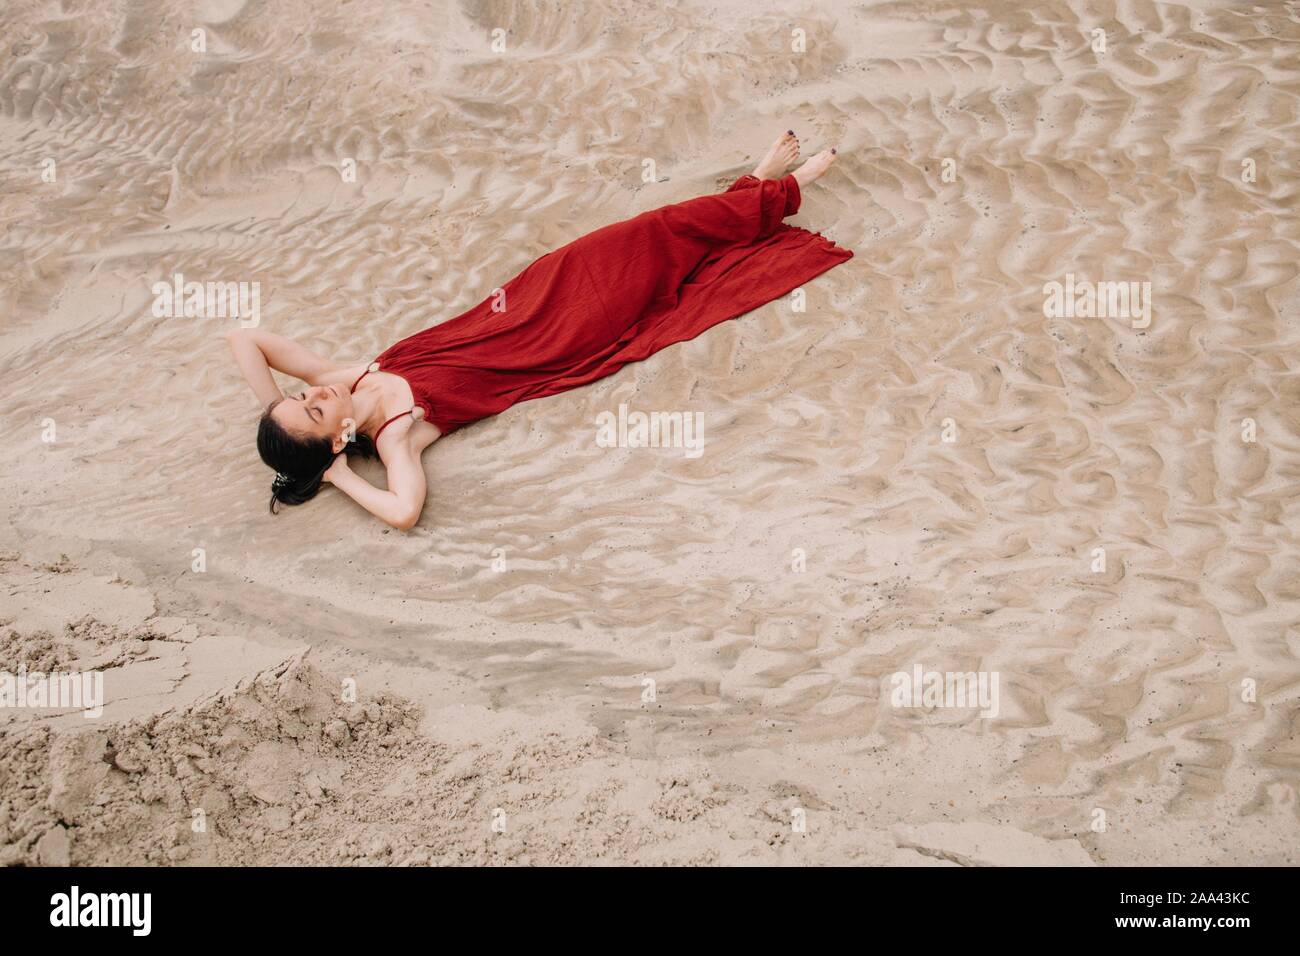 Frau im Sand Tagträumen, Russland Stockfoto